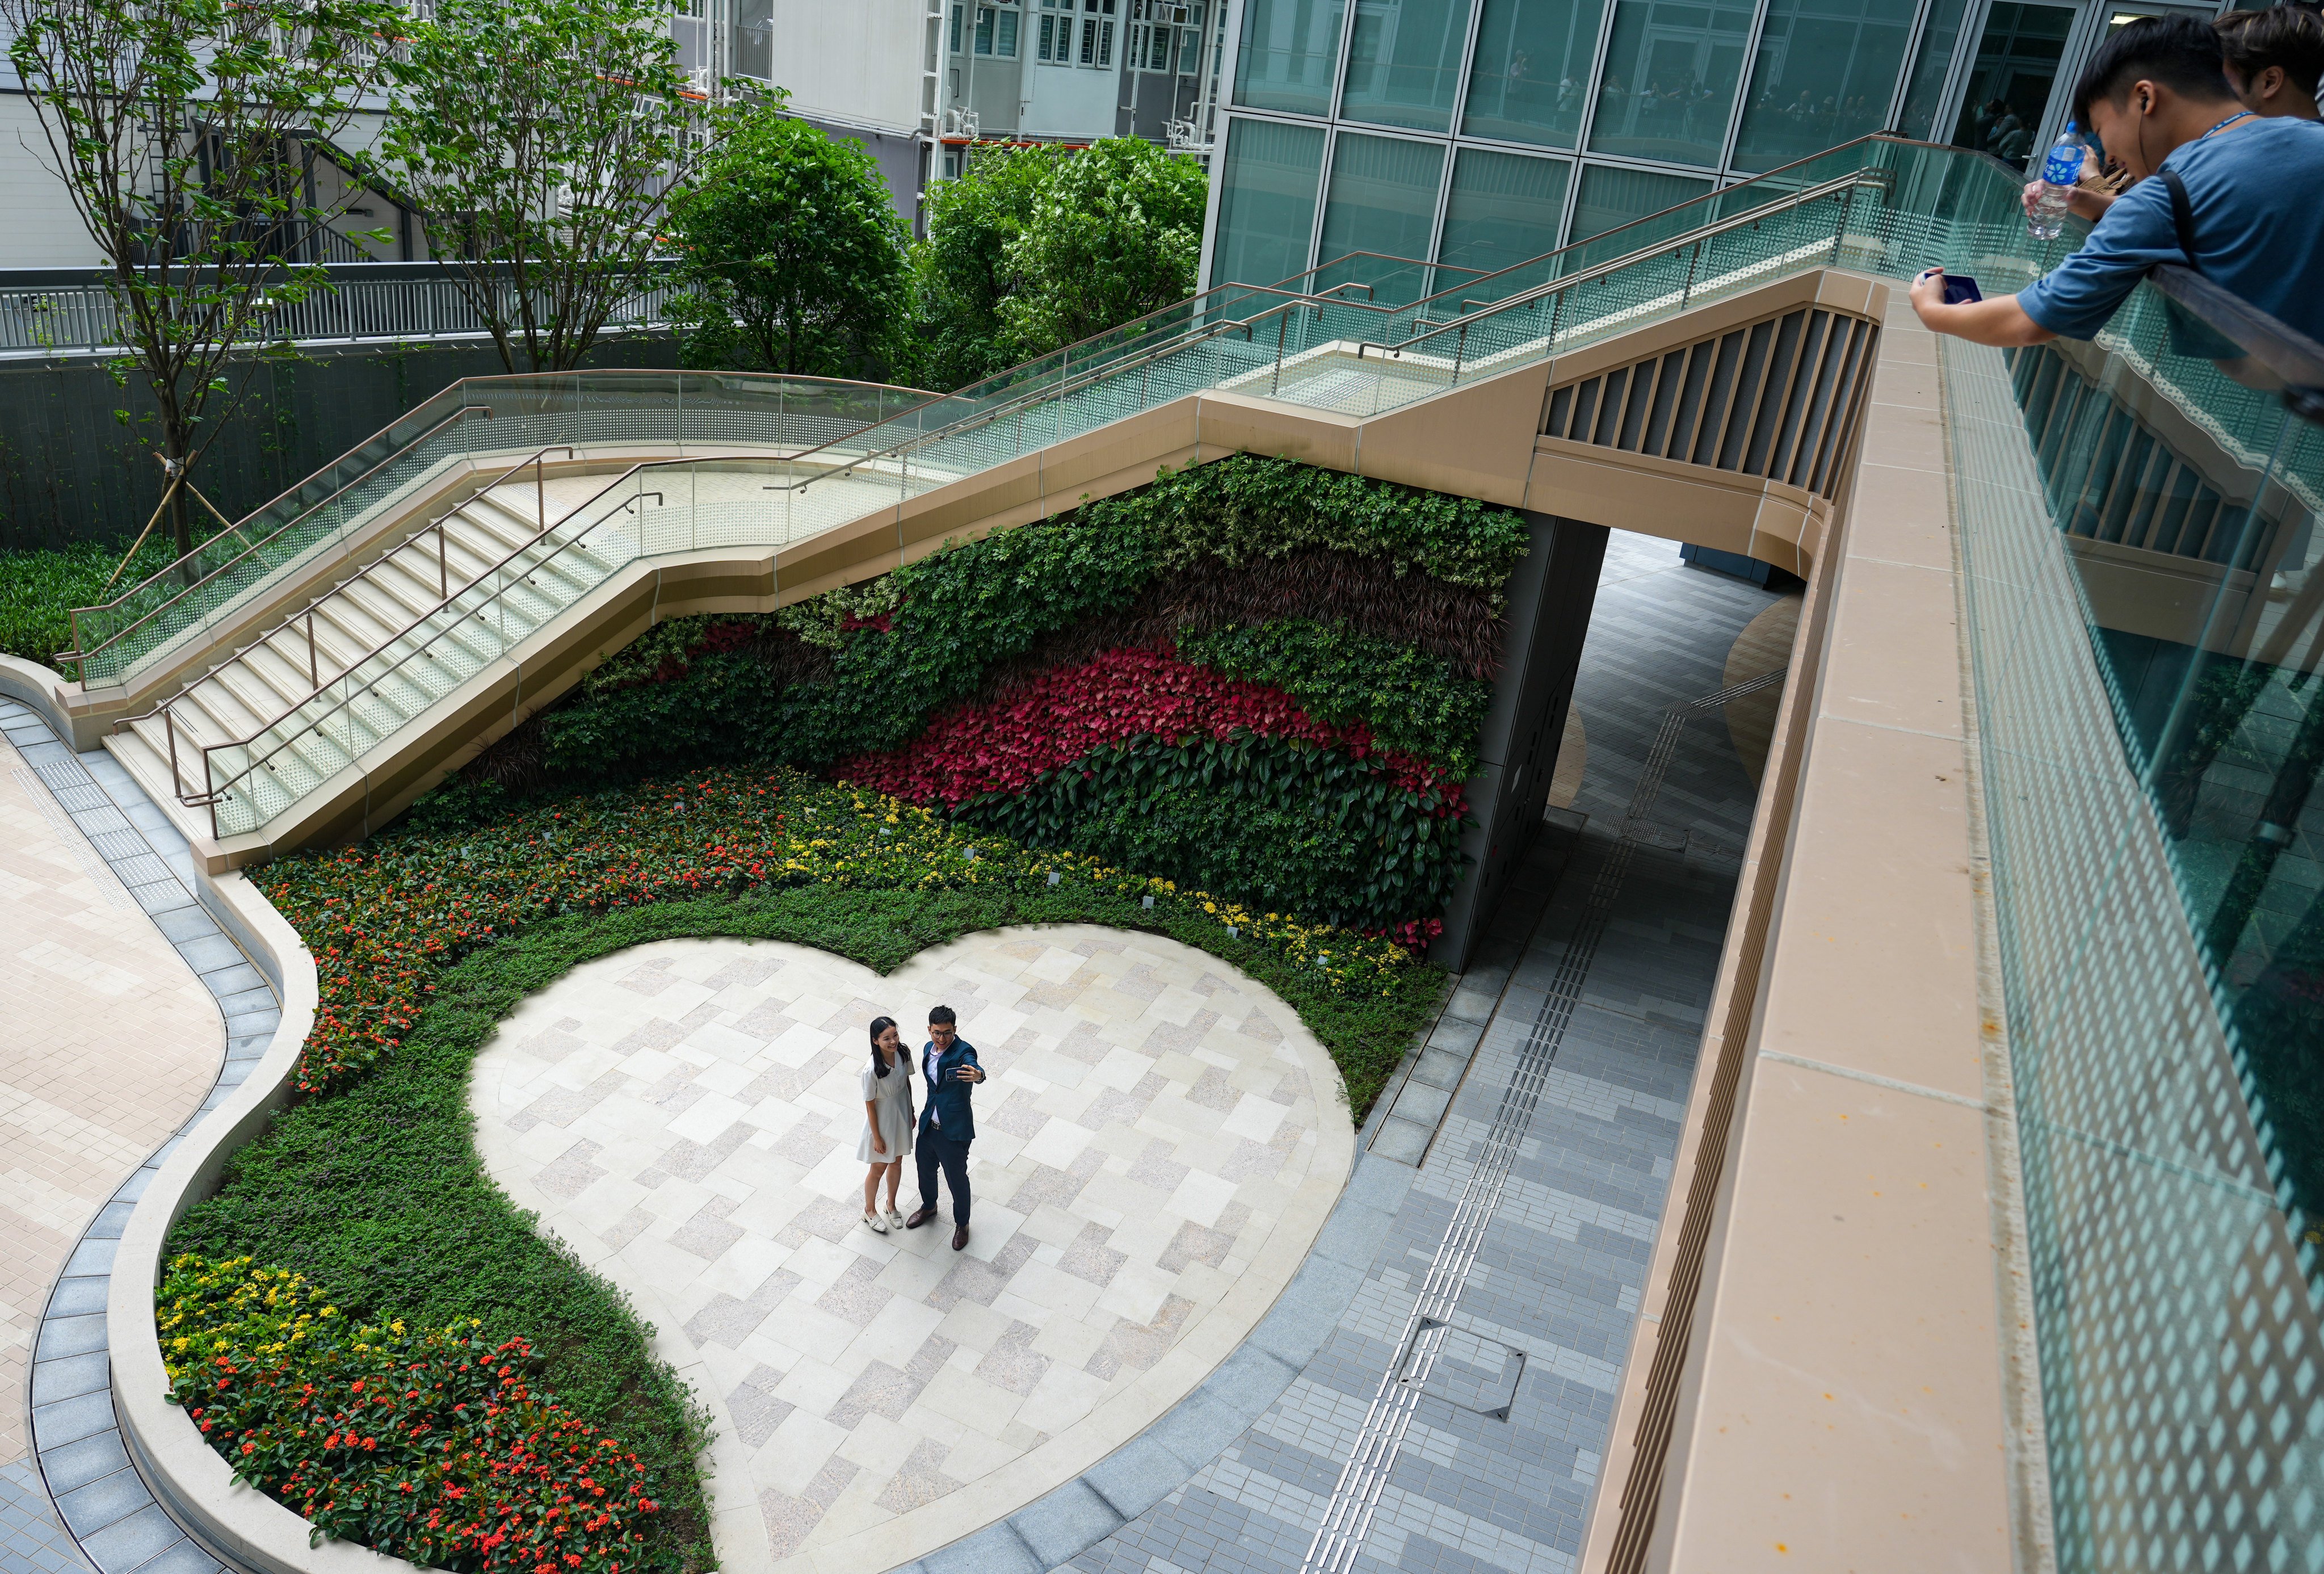 A new marriage registry in Tseung Kwan O boasts a heart-shaped garden. Photo: Sam Tsang